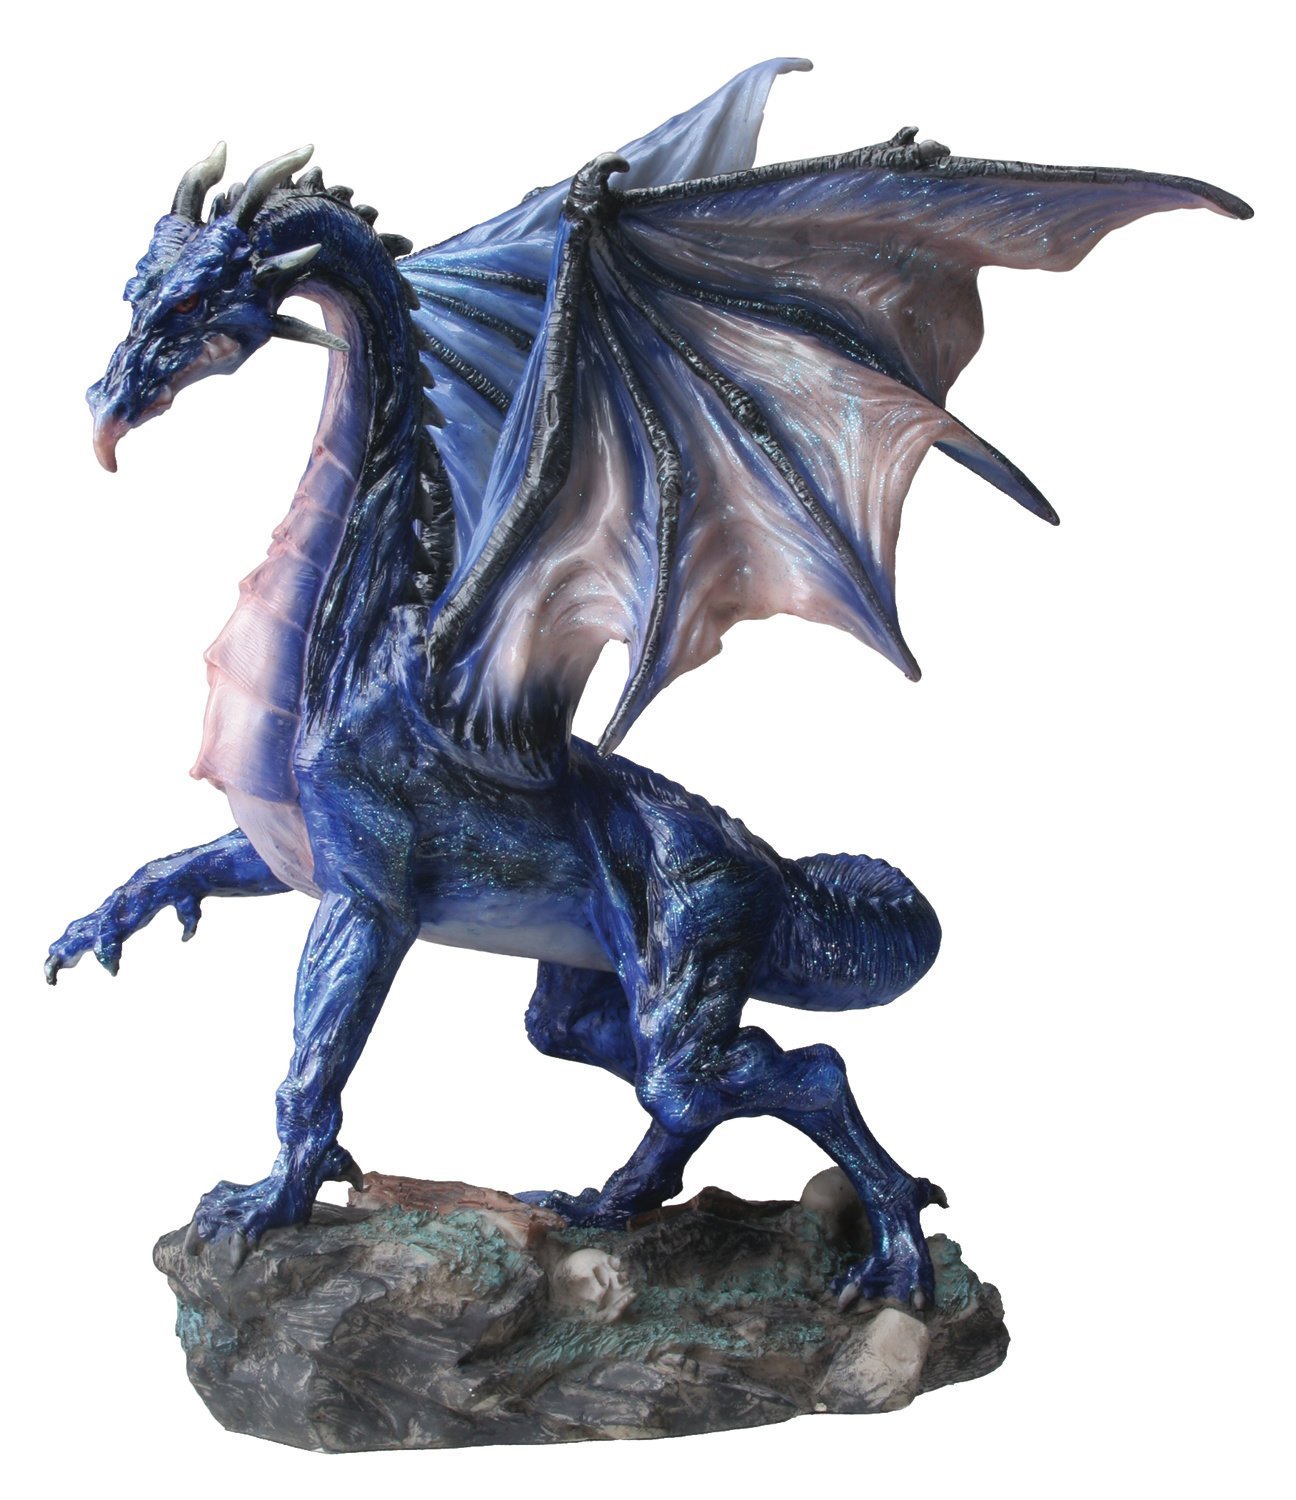 YTC Midnight Dragon - Collectible Figurine Statue Sculpture Figure Model